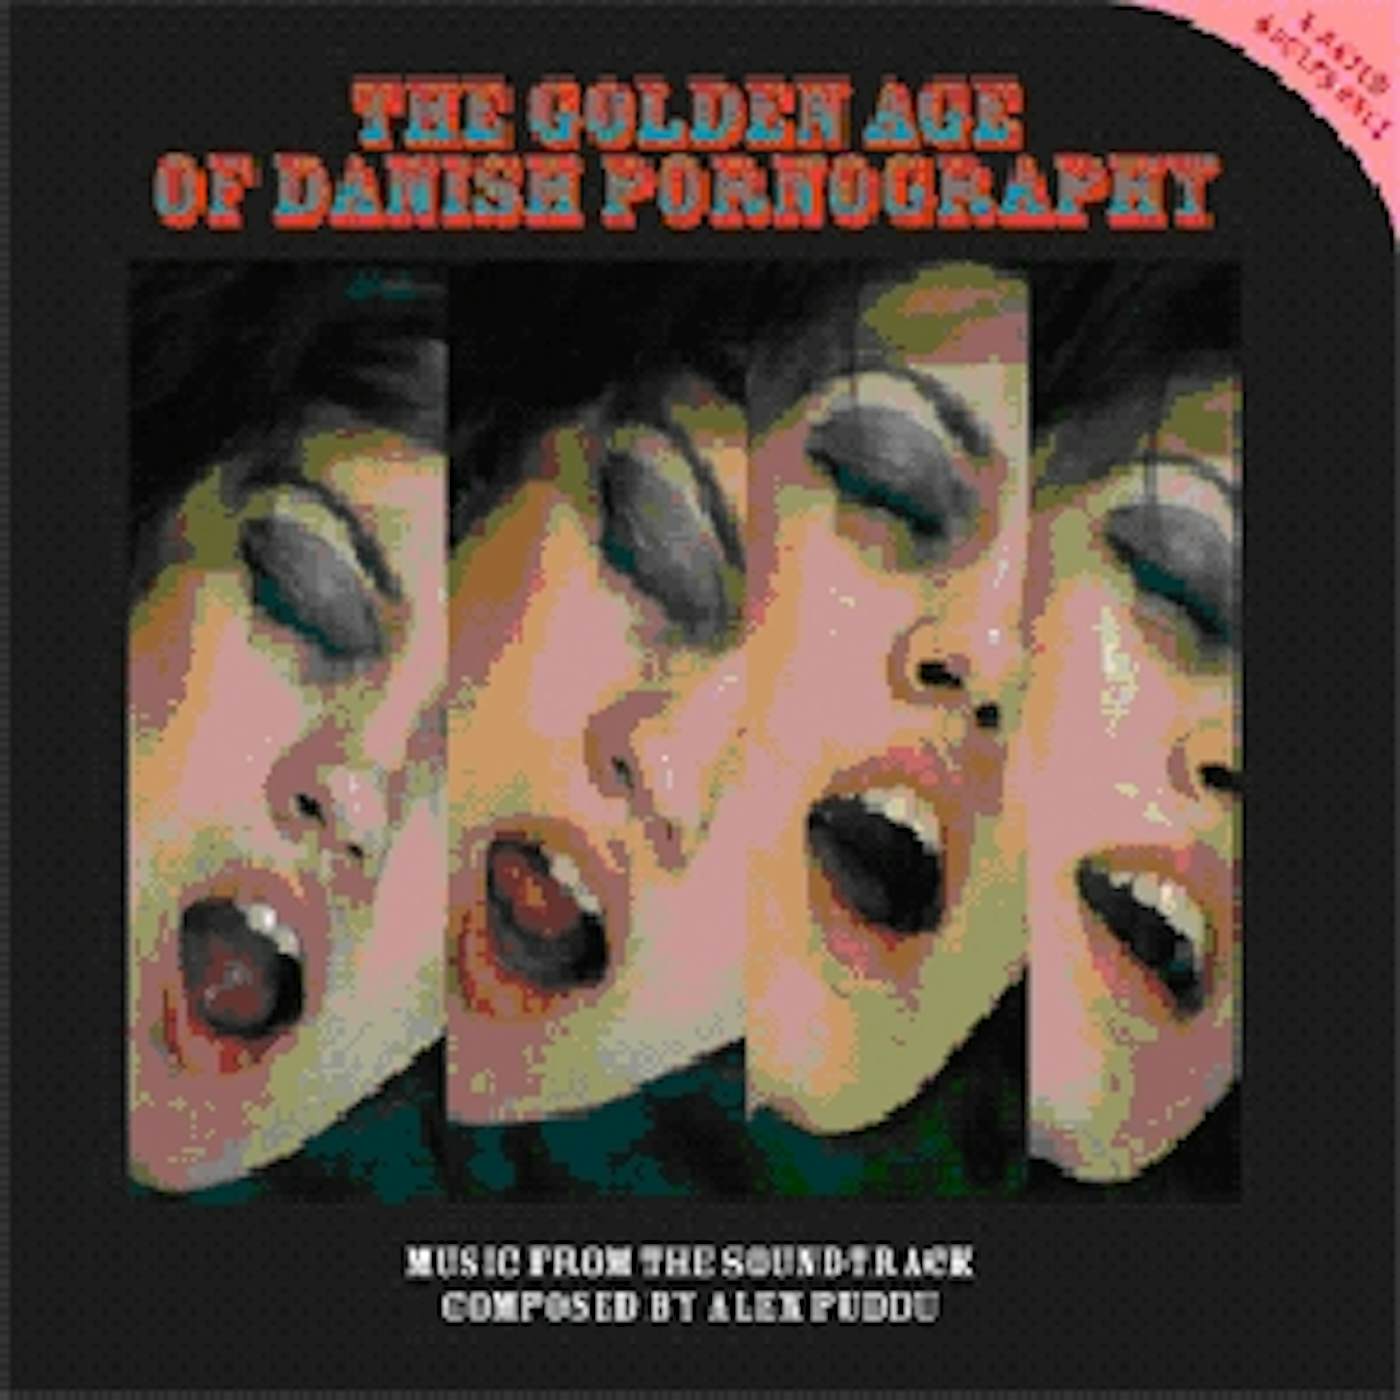 Alex Puddu GOLDEN AGE OF DANISH PORNOGRAP Vinyl Record